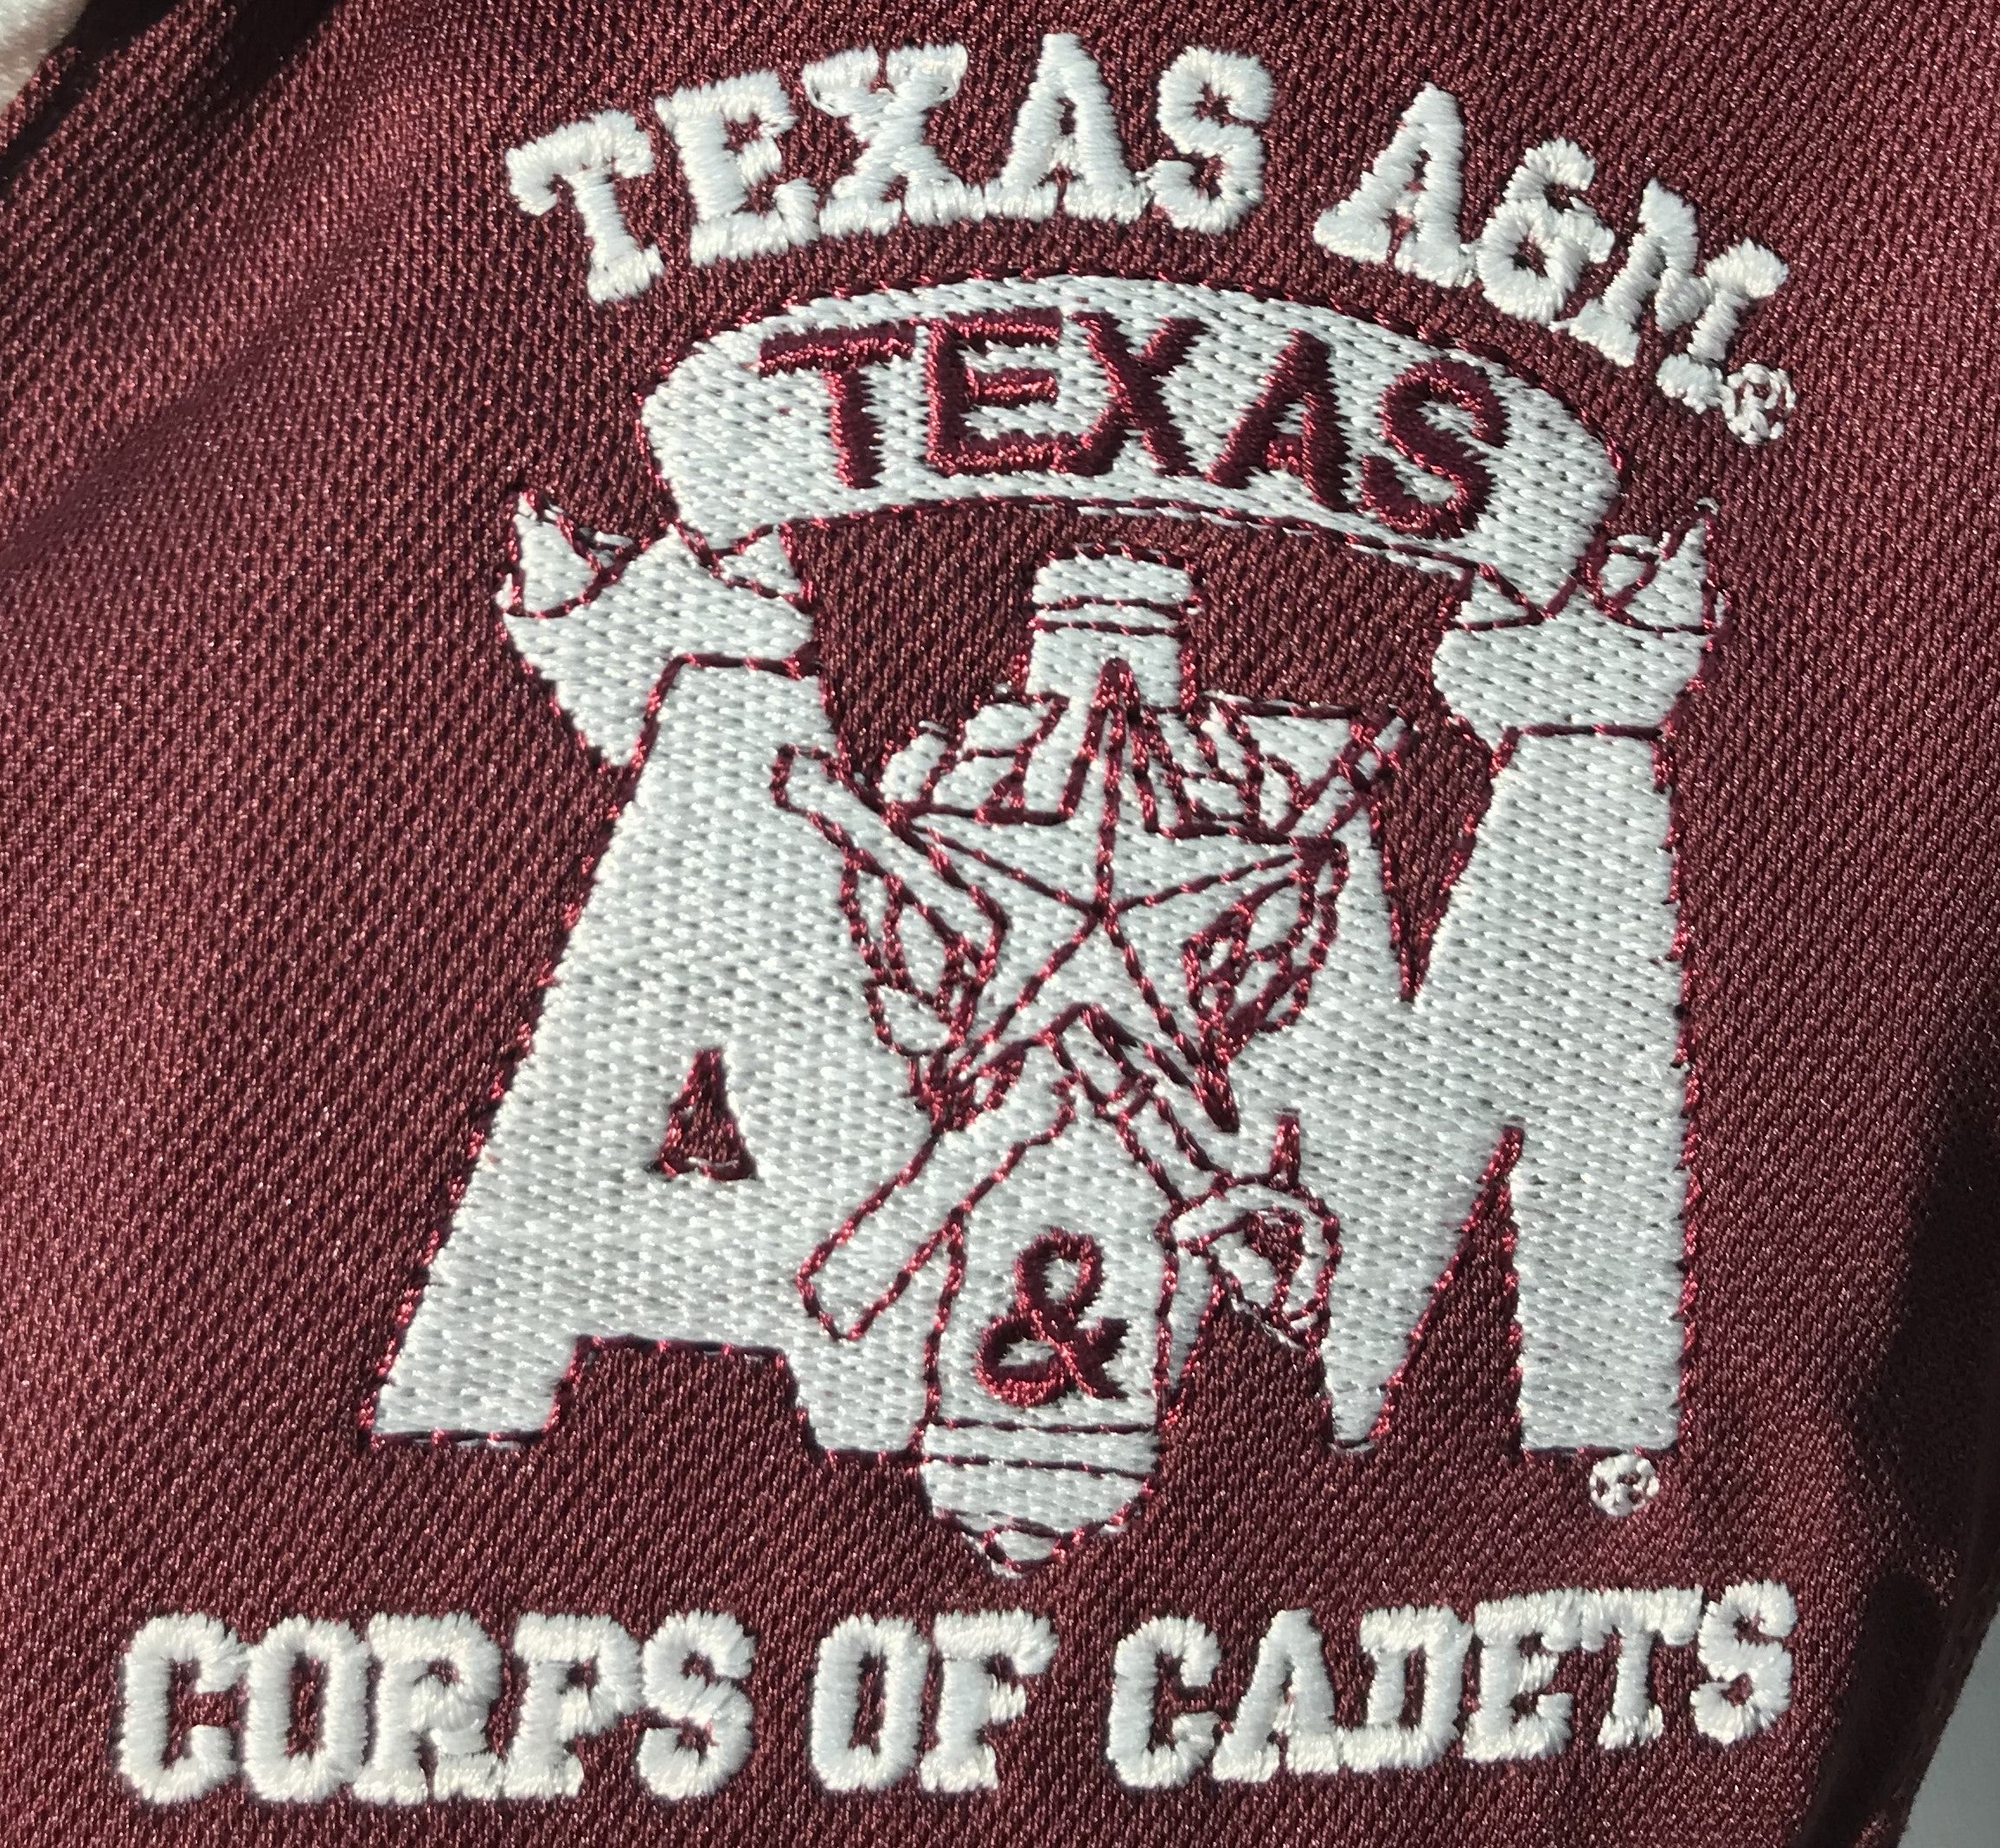 Ladies Maroon Short Sleeve Fishing Shirt – Shop Corps of Cadets